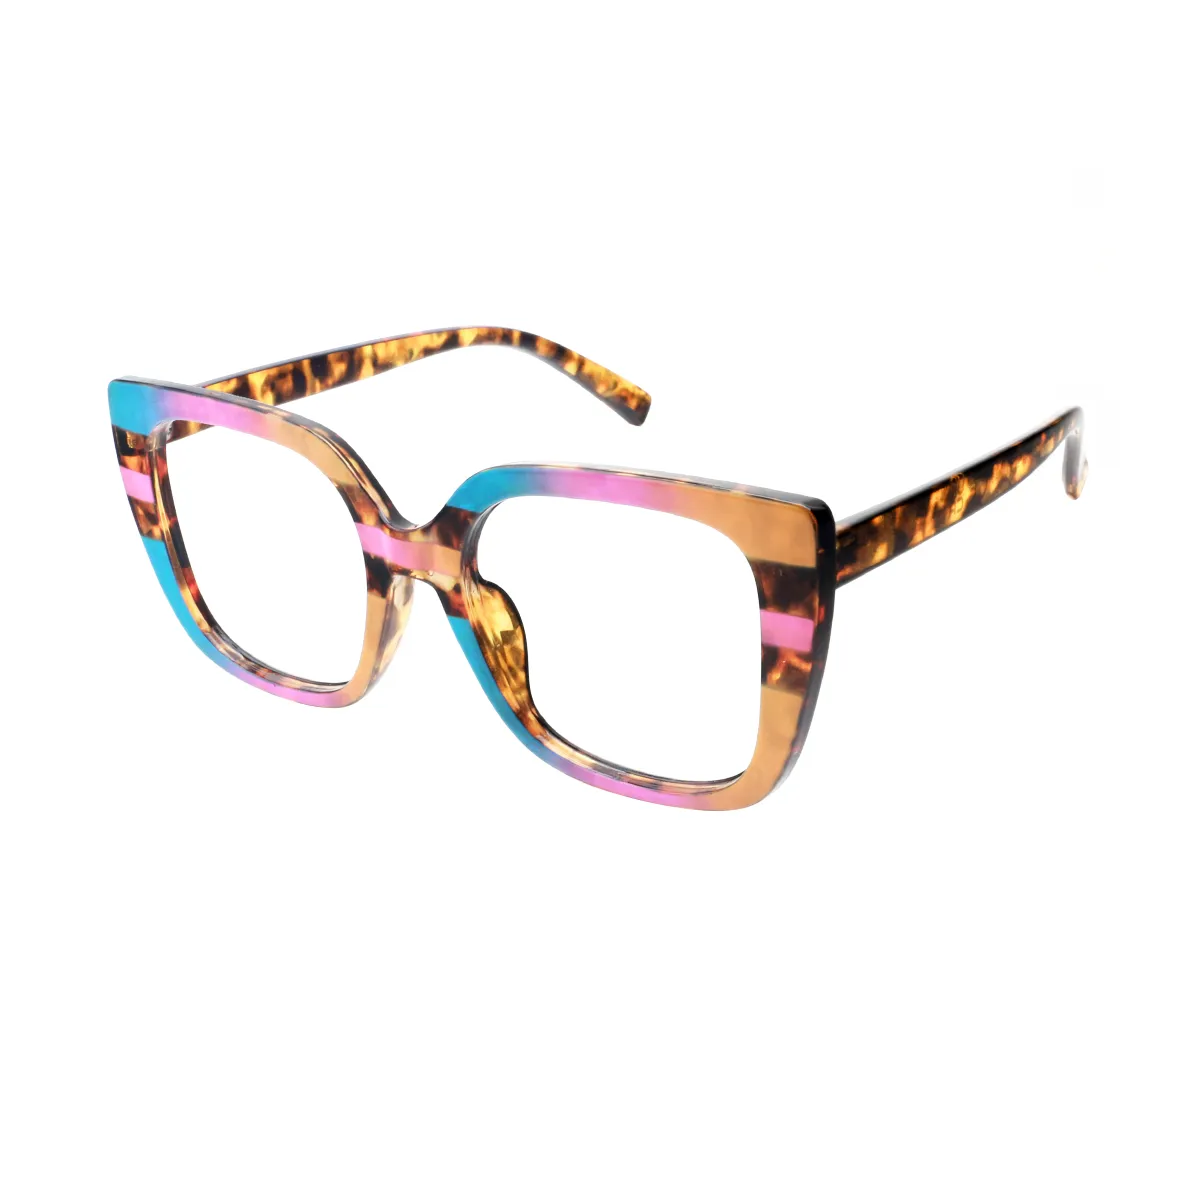 Delilah - Square Multicolor Glasses for Women